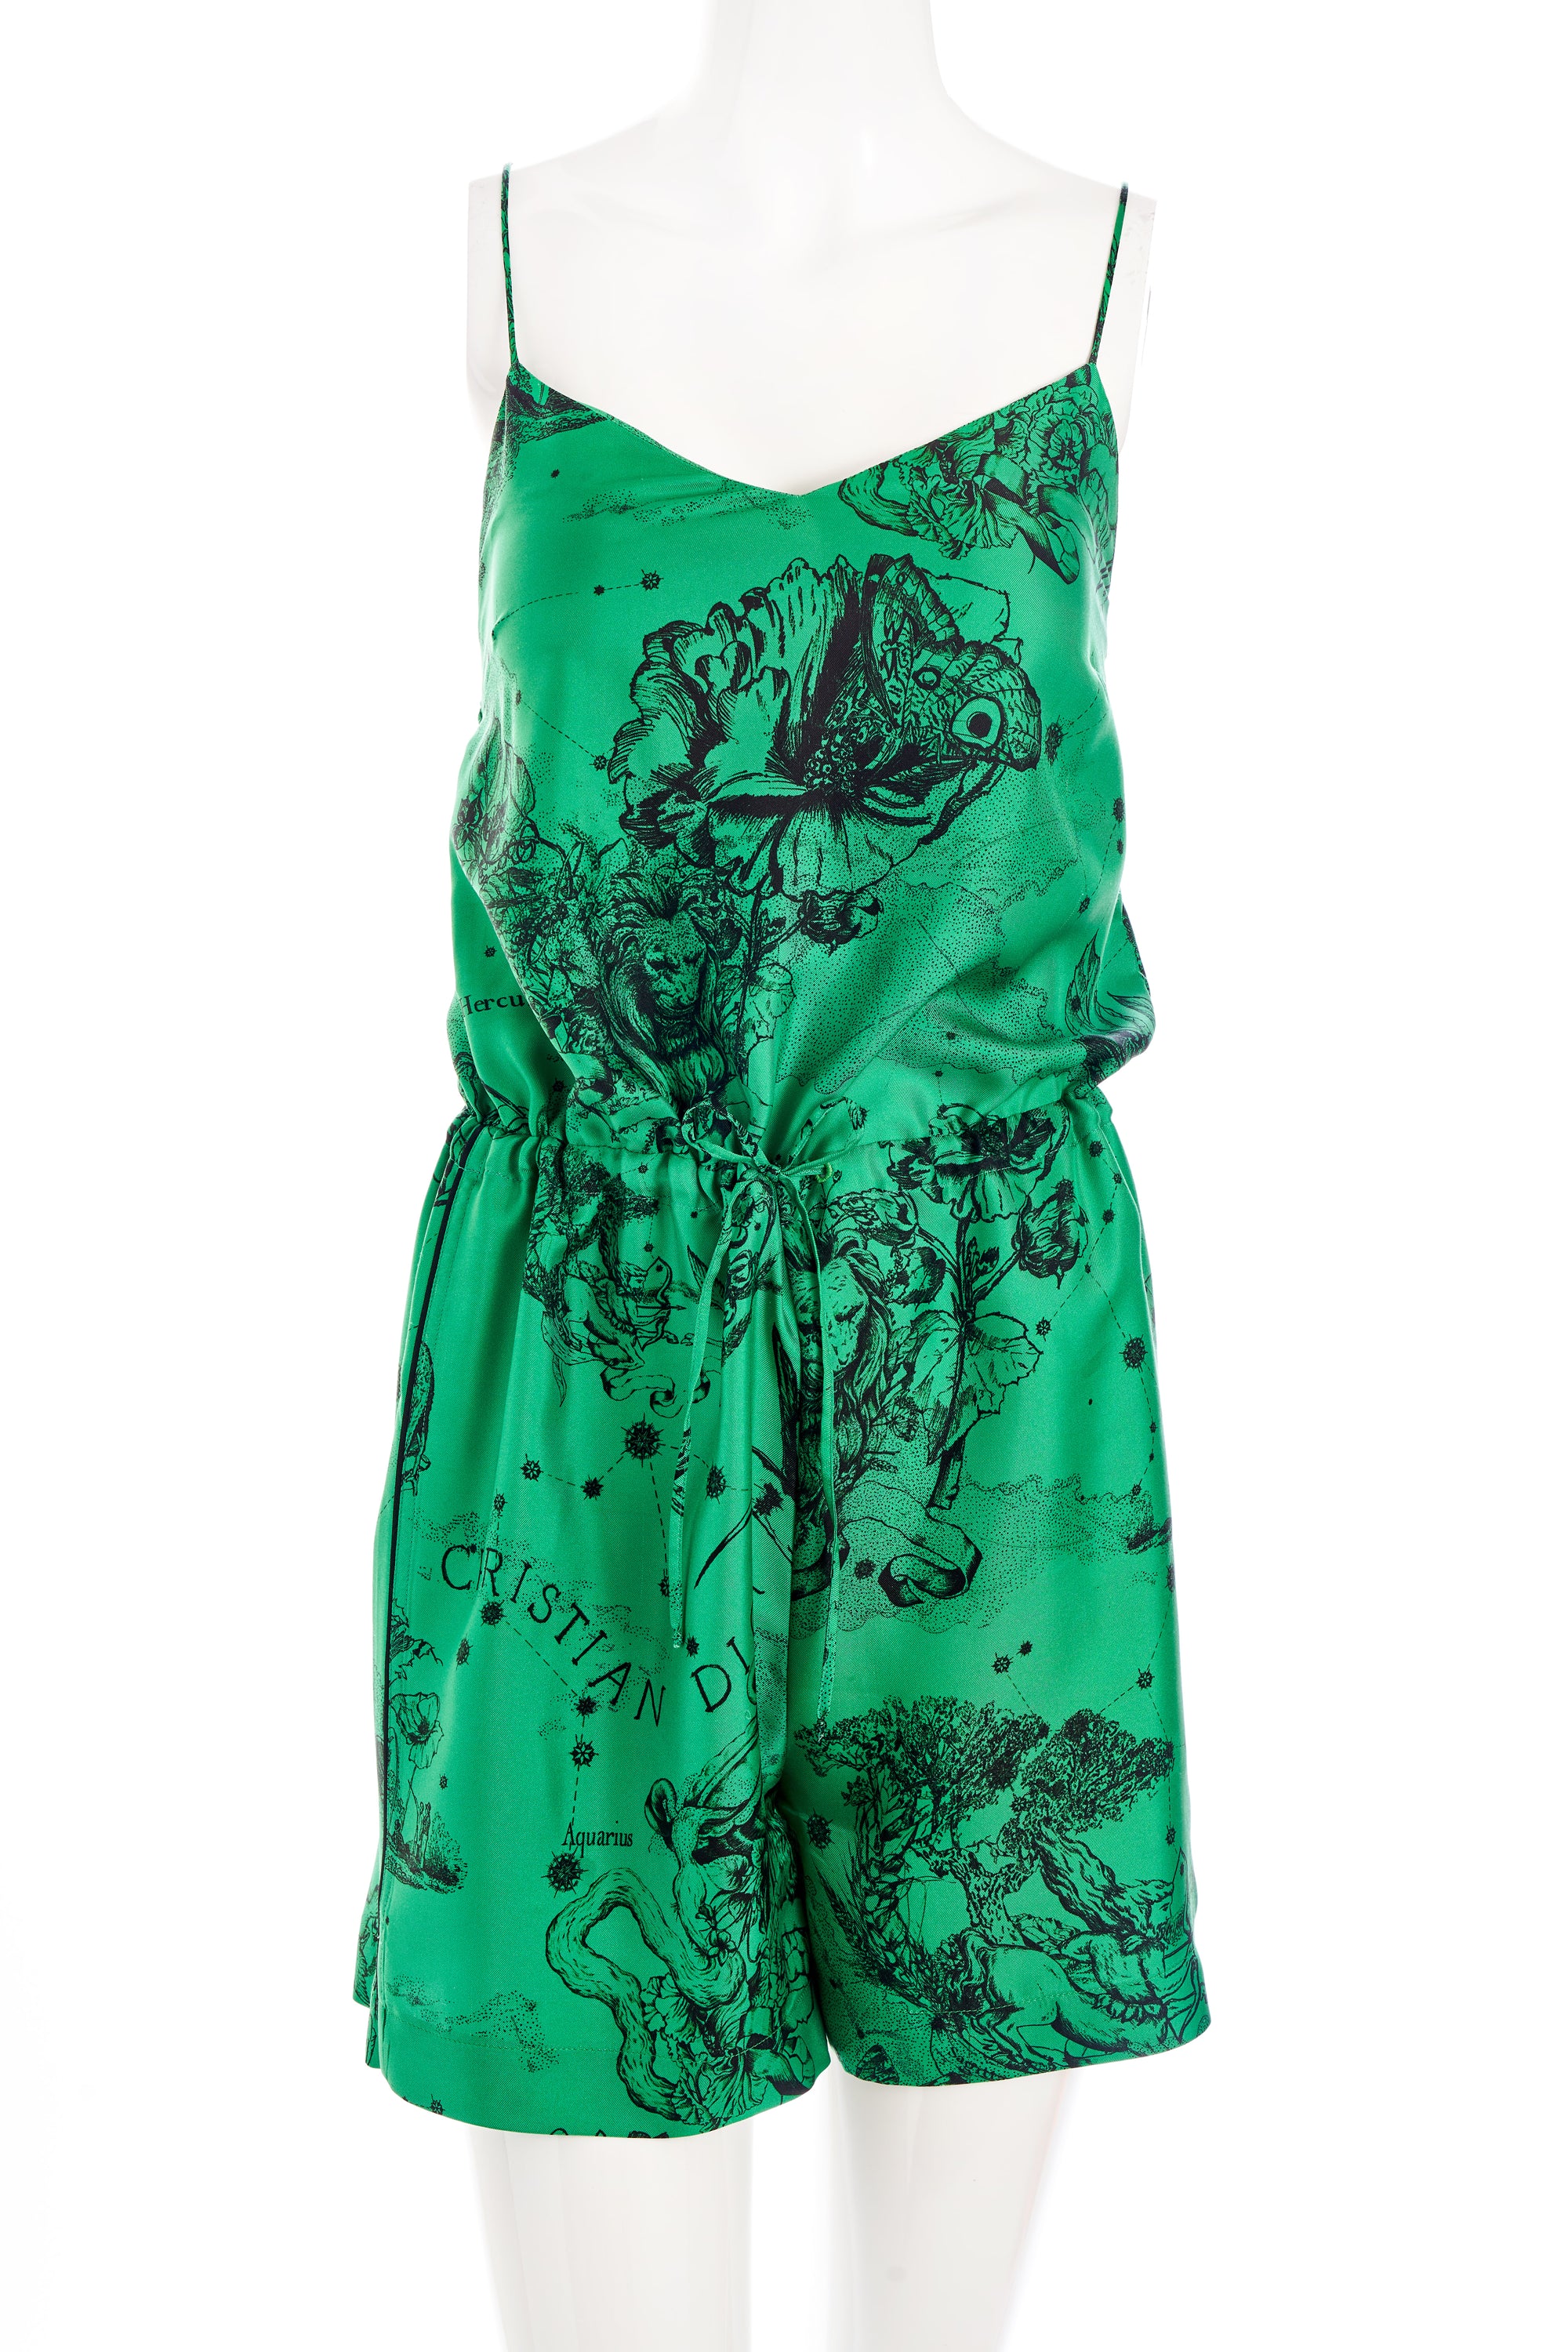 Christian Dior Constellation Print Green Silk Romper